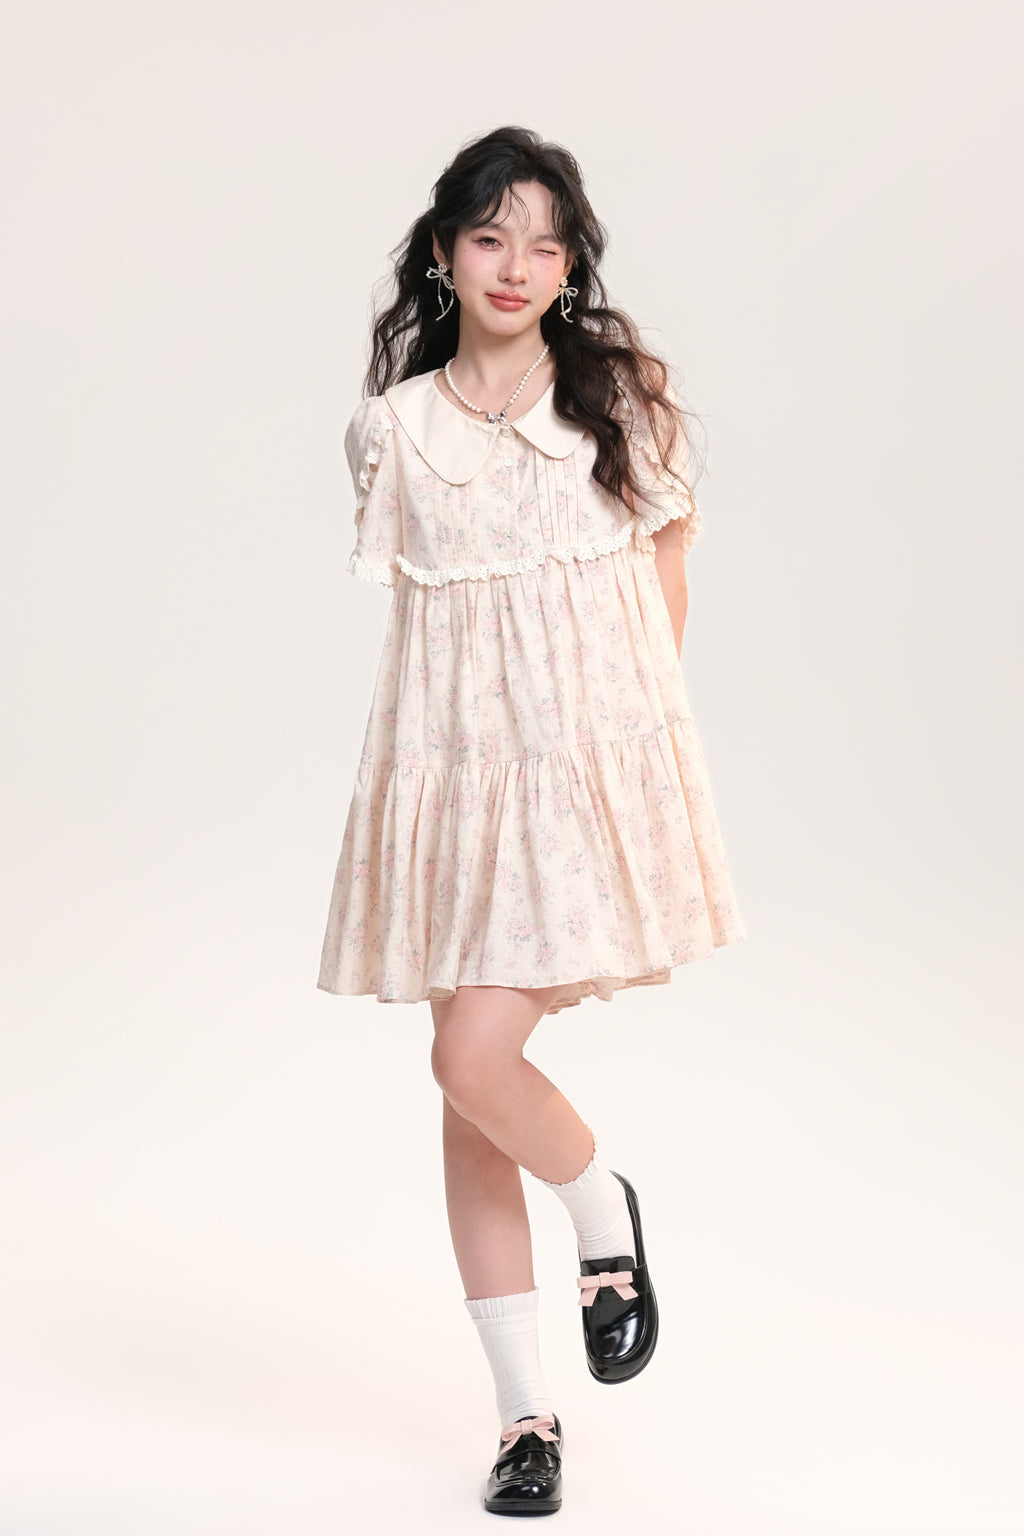 White Jasmine Doll Collar Dress AOO0028